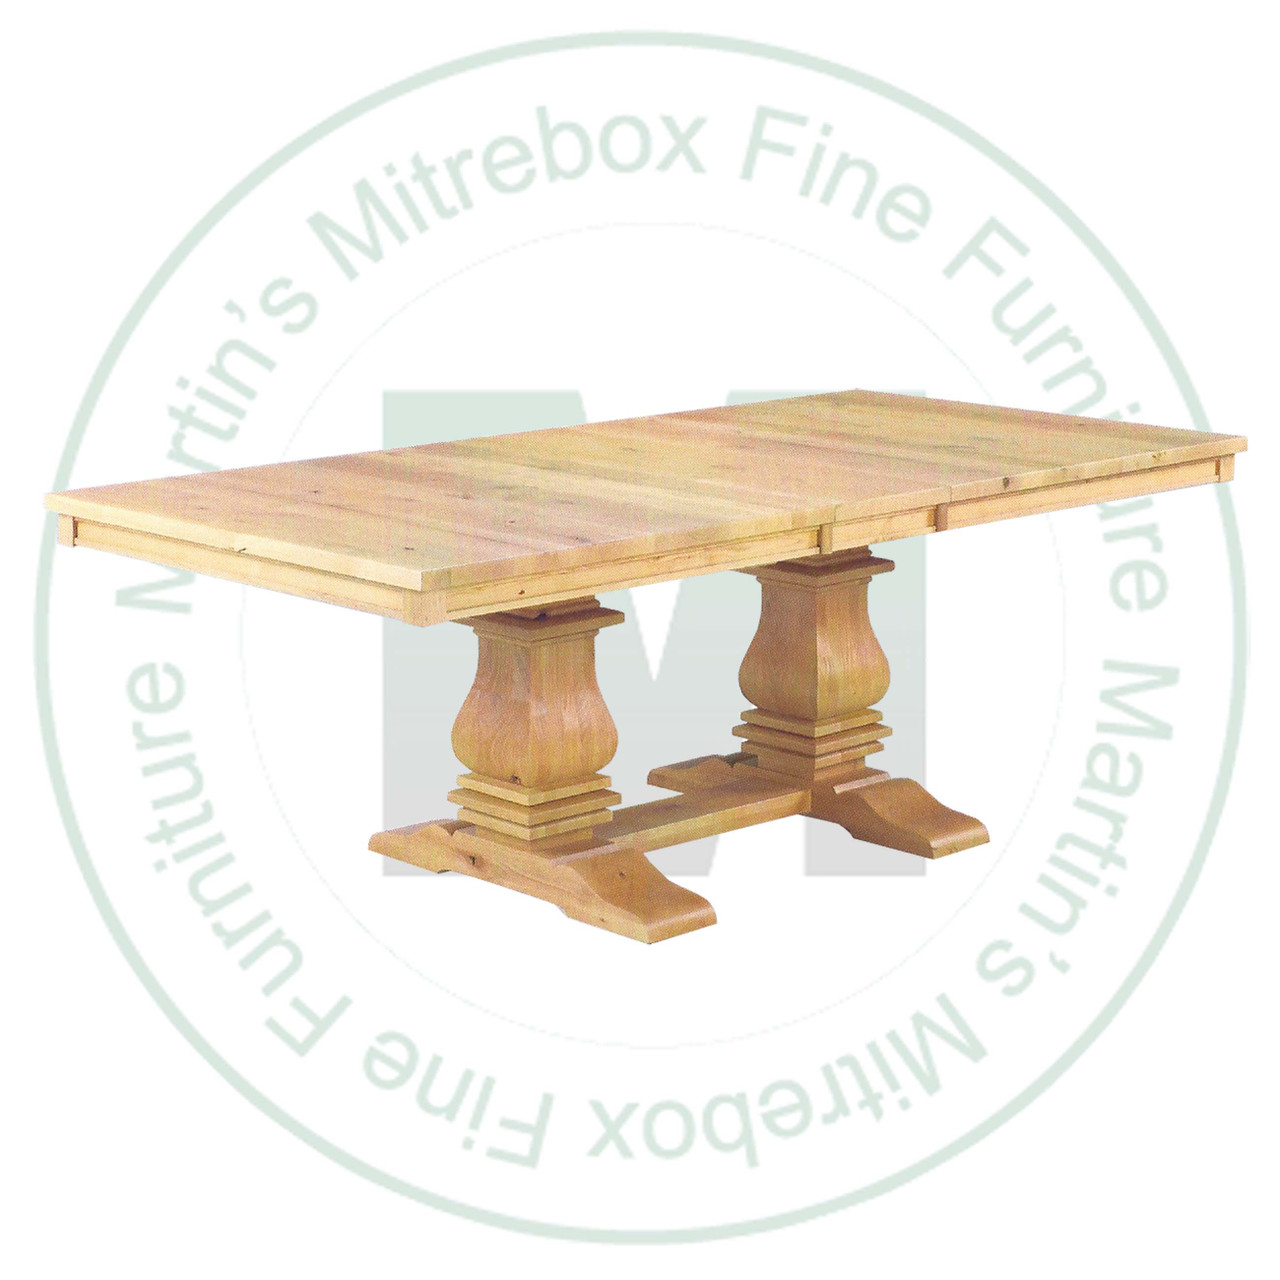 Oak Mediterranean Solid Top Pedestal Table 48''D x 84''W x 30''H. Table Has 1.25'' Thick Top